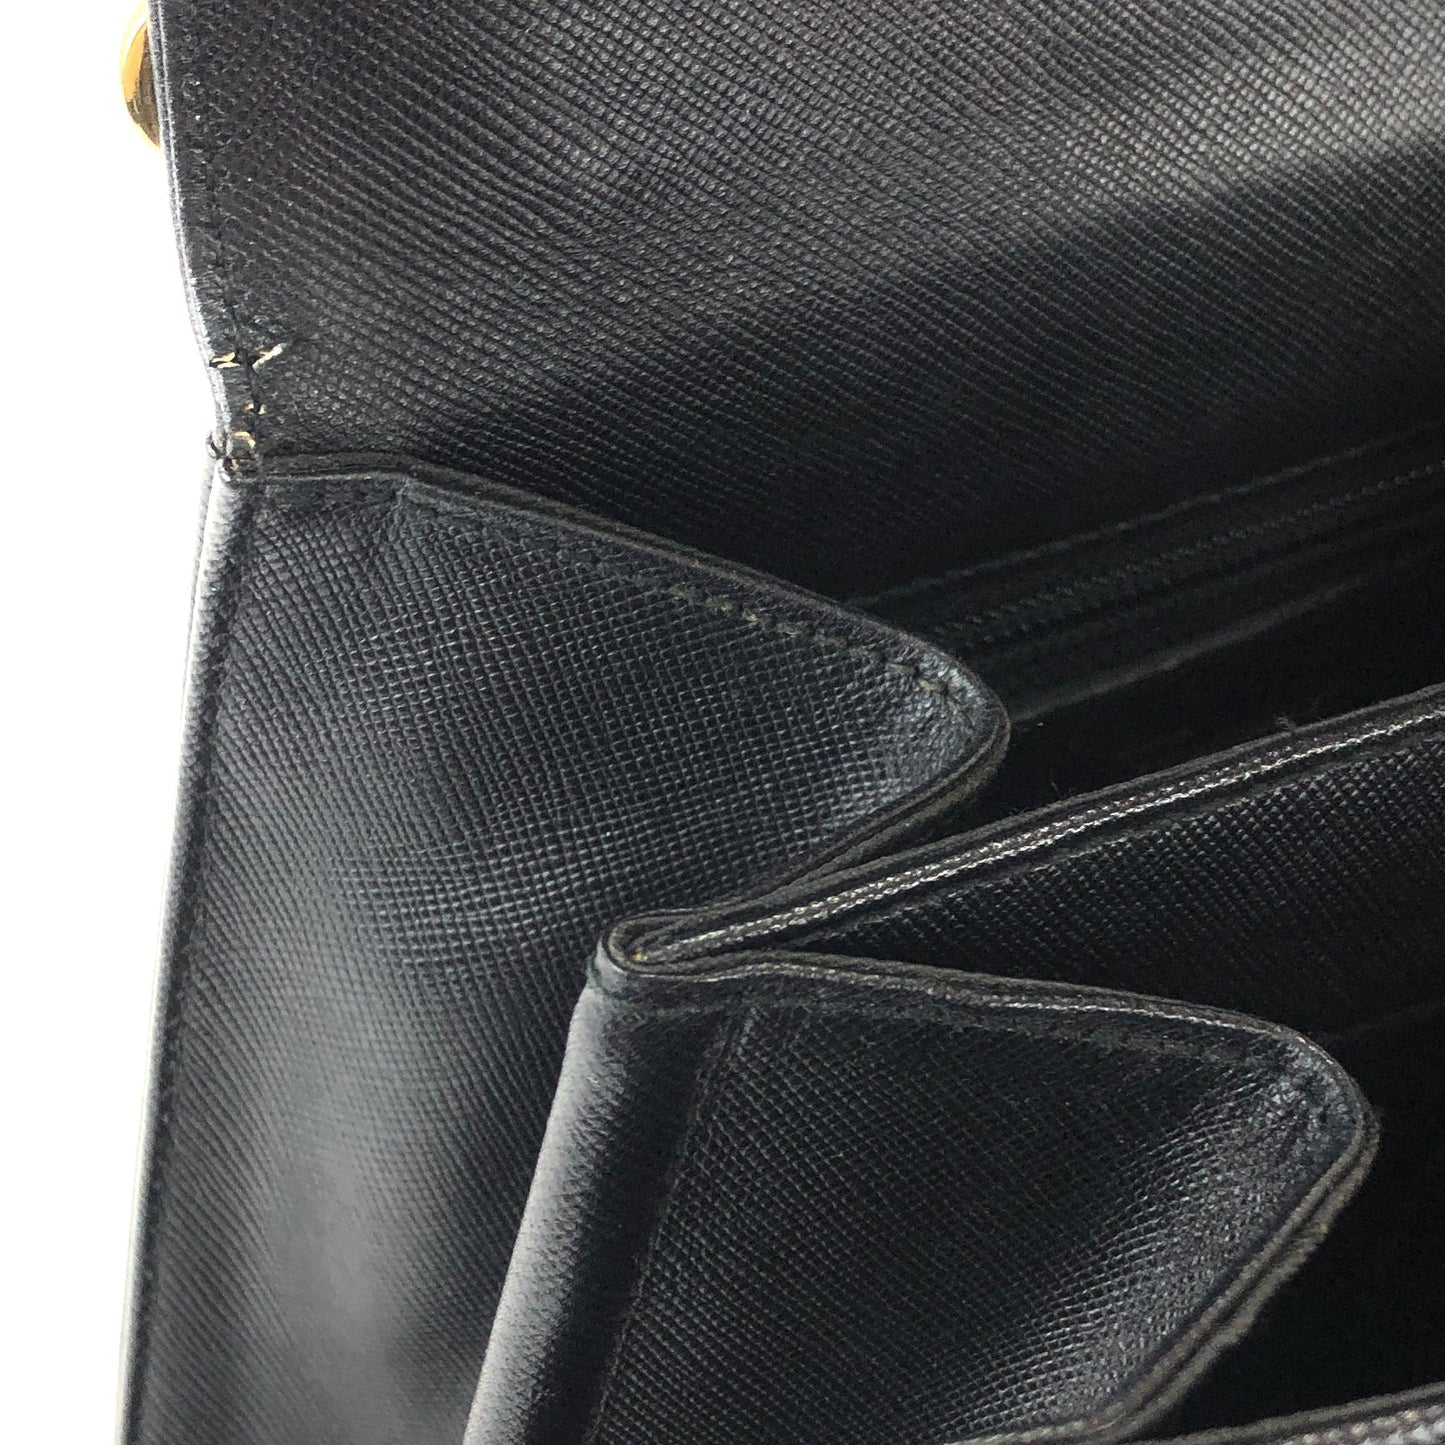 Salvatore Ferragamo Gancini embossed leather Saffiano 2WAY Kelly type shoulder bag black vintage old b6ypdf